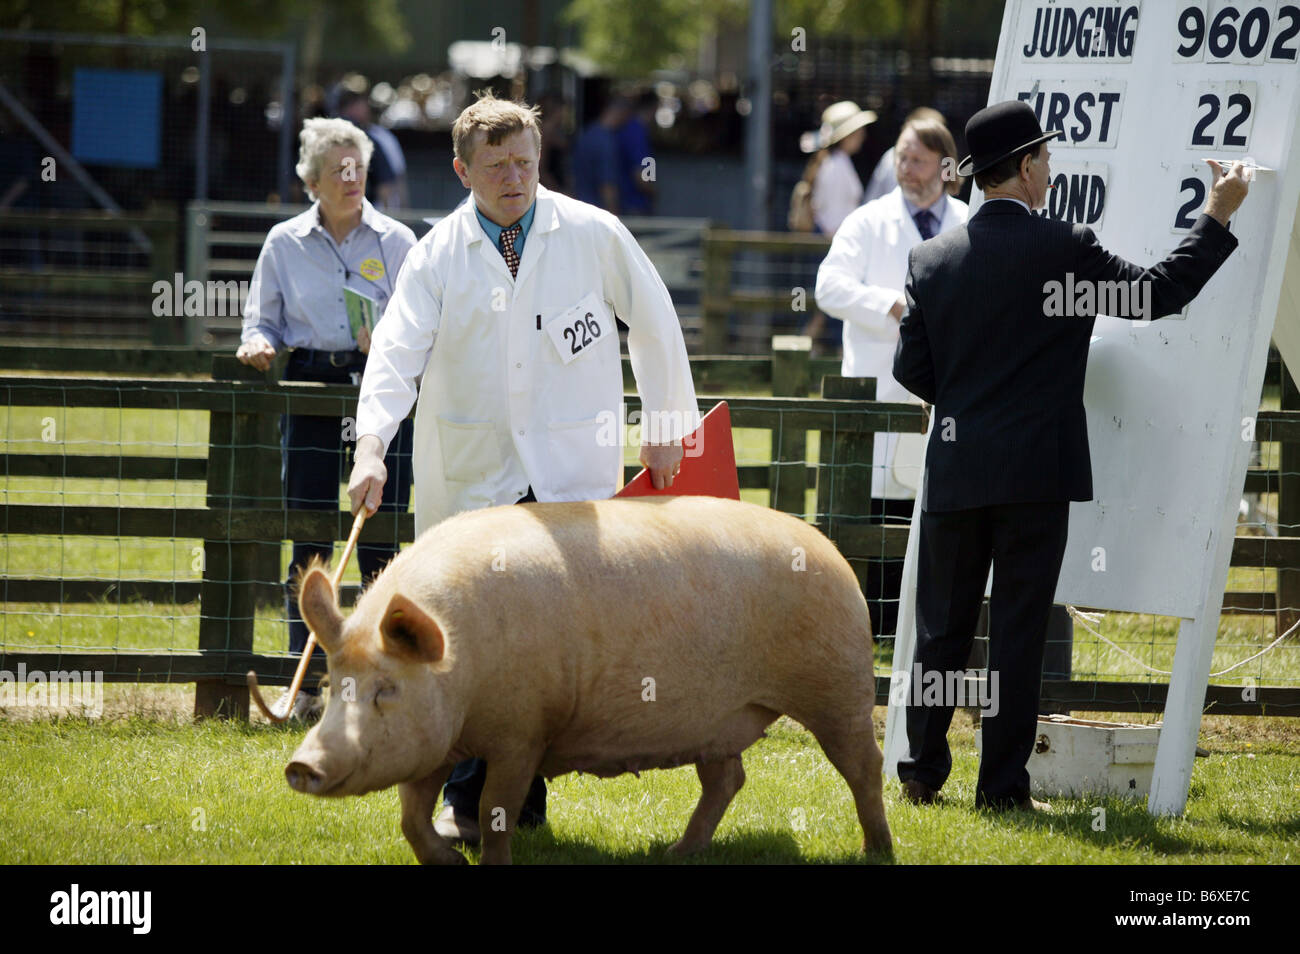 A pig farmer parades his animal around a judging ring at the Royal Show at Stoneleigh Warwickshire UK Stock Photo